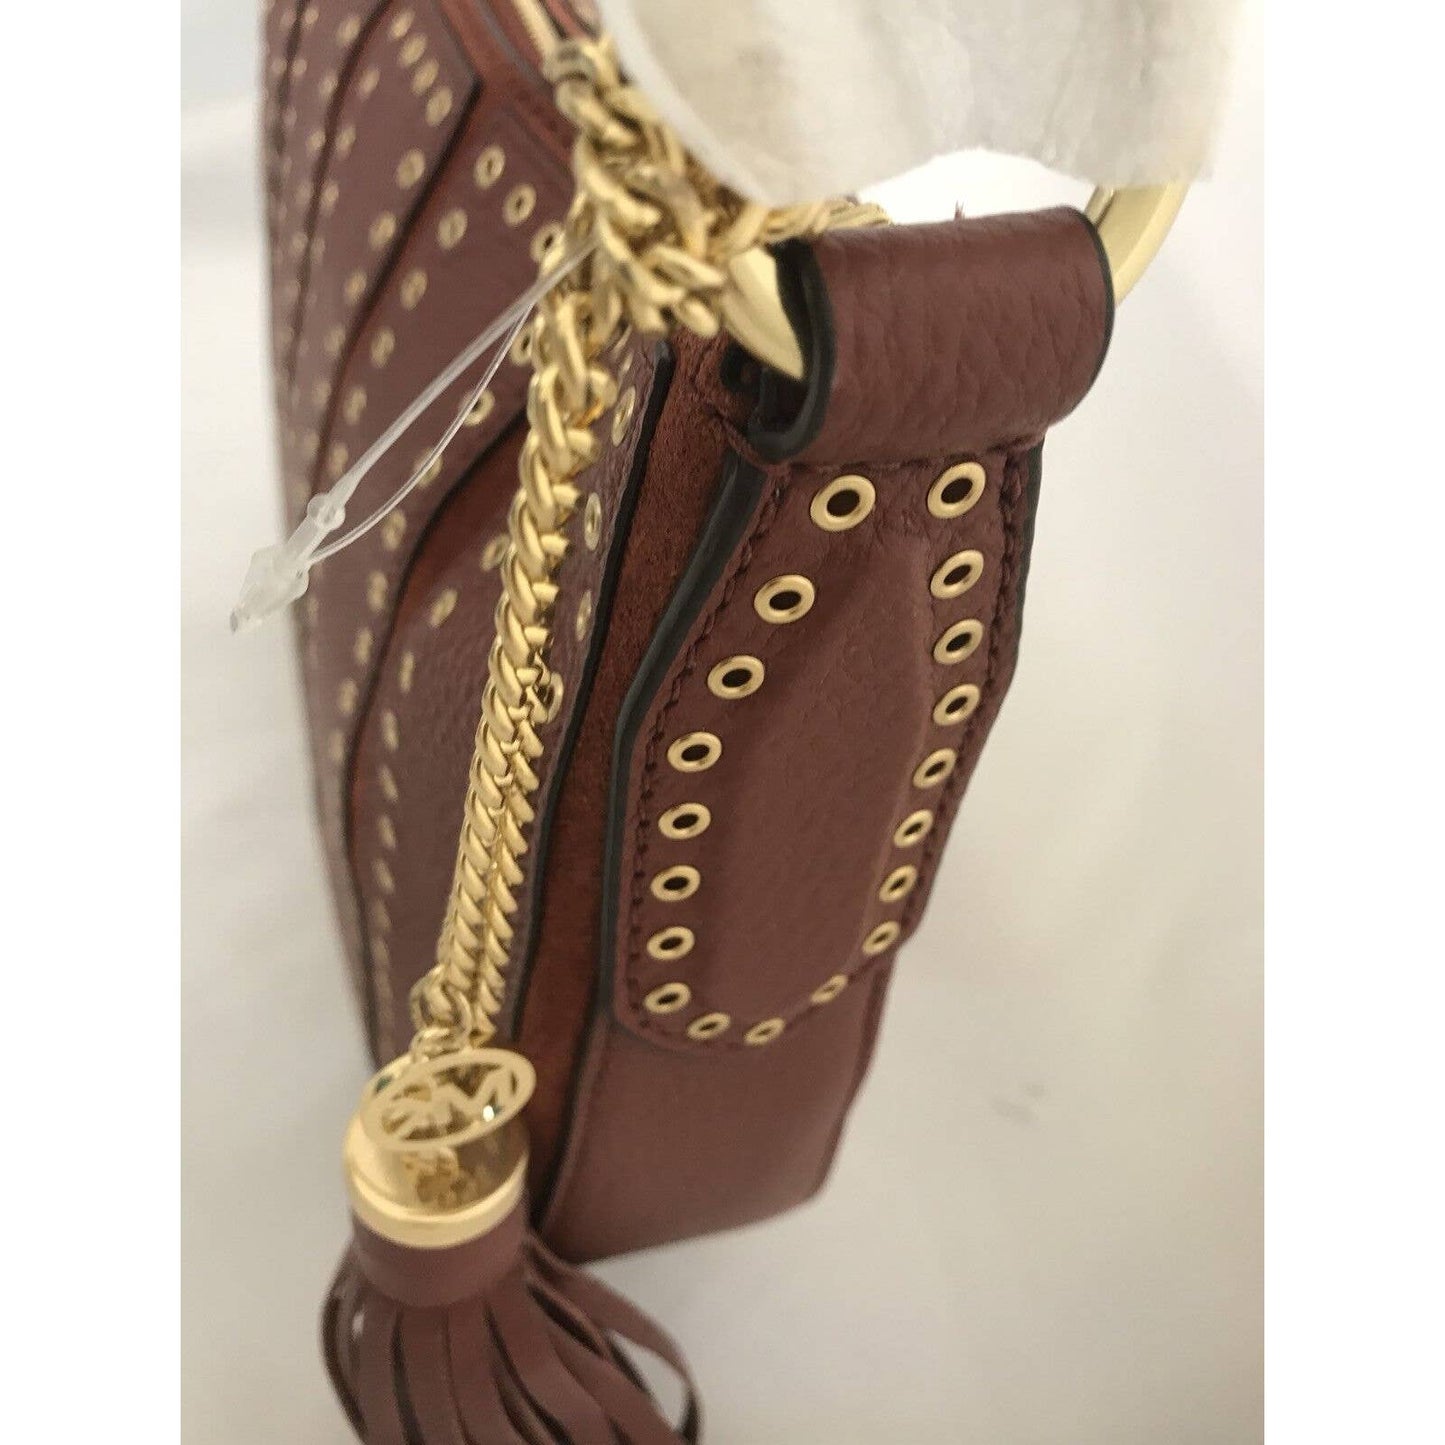 MICHAEL KORS, BROOKLYN Grommet Medium Hobo Bag, Brick Leather